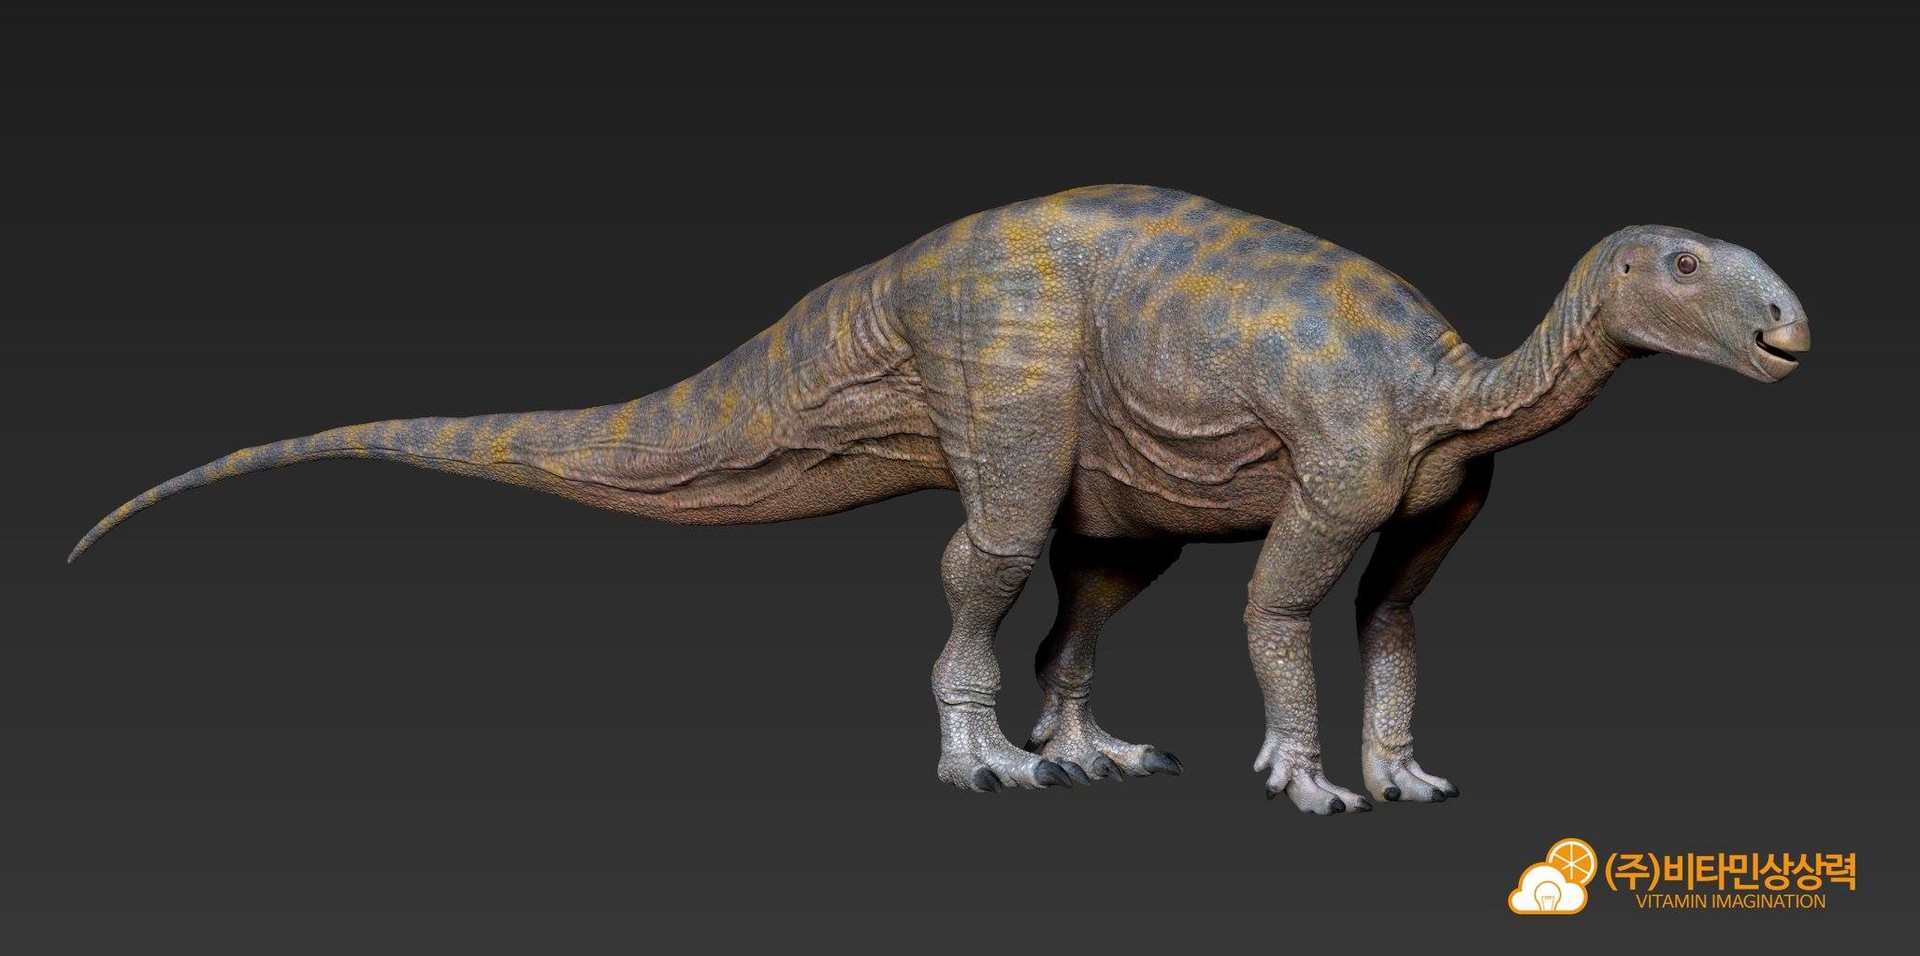 jin-kyeom-kim-tenontosaurus.jpg